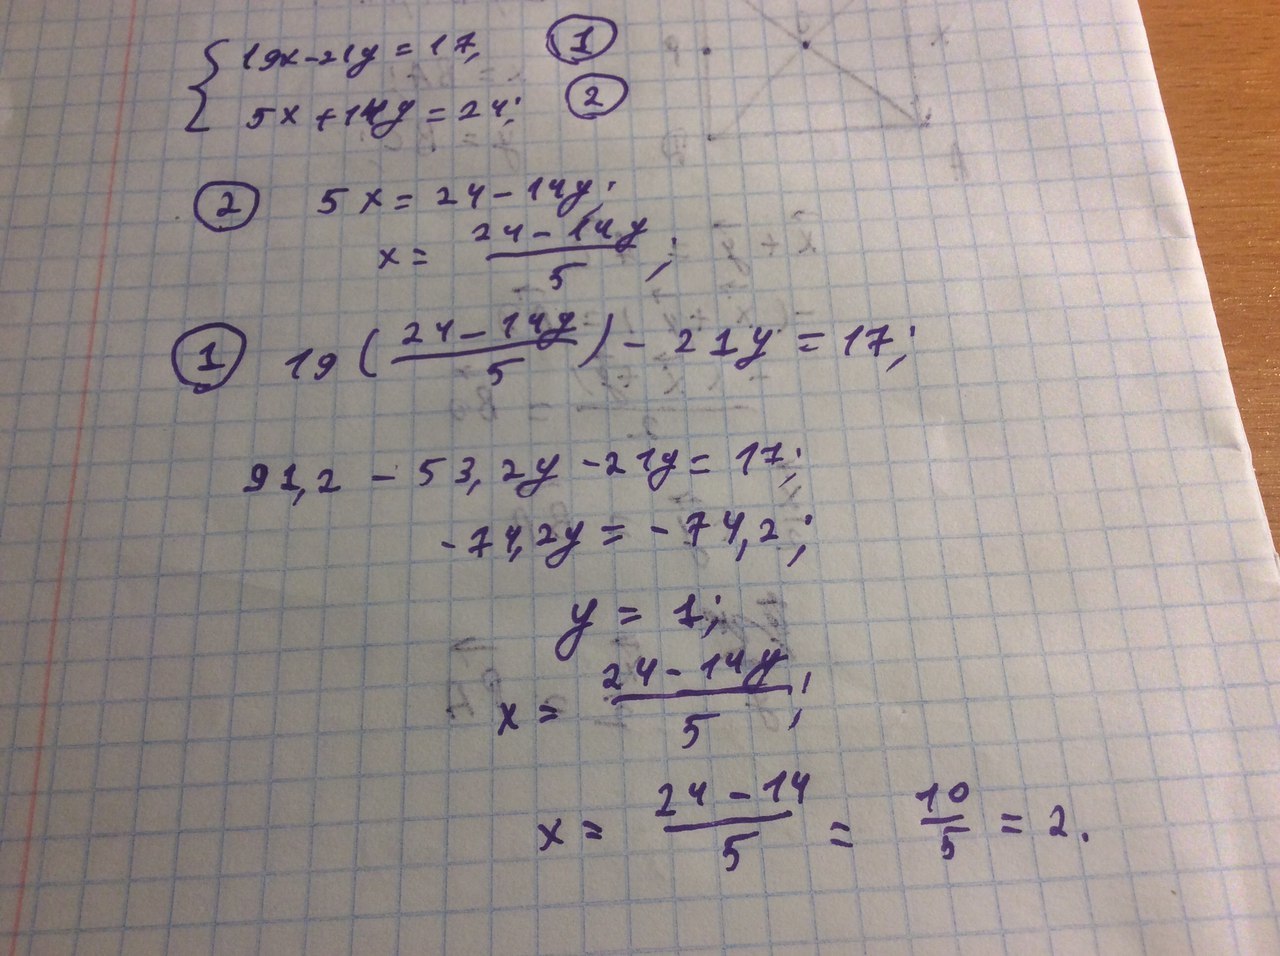 05 14 21 3. 3х+21=2х+14. 17х-х+5х-19 170. Решение уравнения 17x-x+5x-19=170. X 5 14 решение.